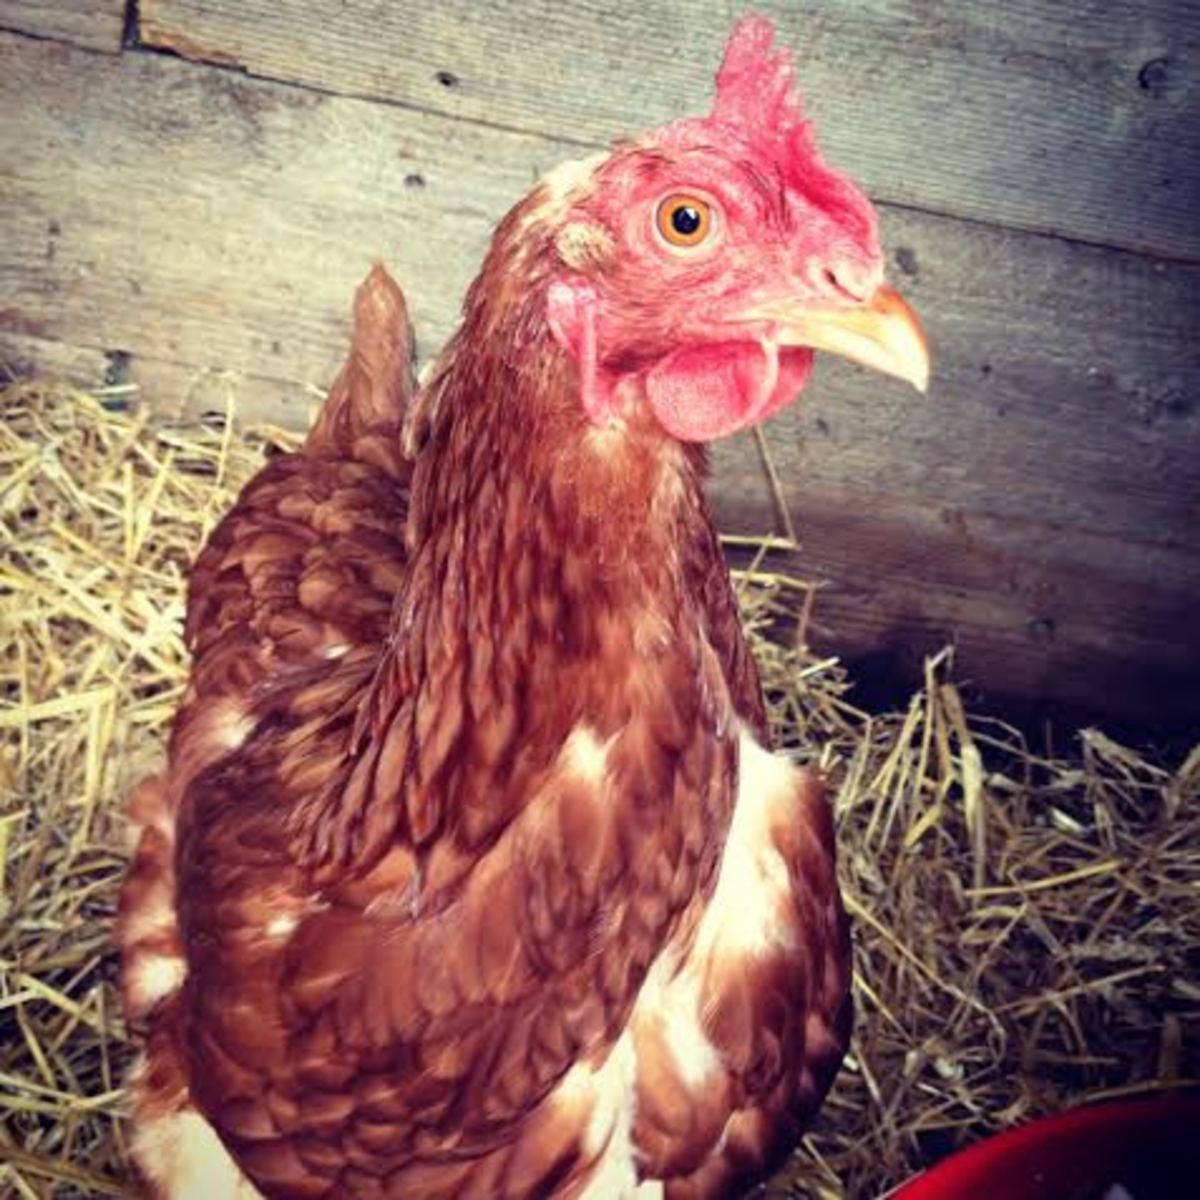 One of our Golden Comet hens, Dumpling, running around inside our coop.